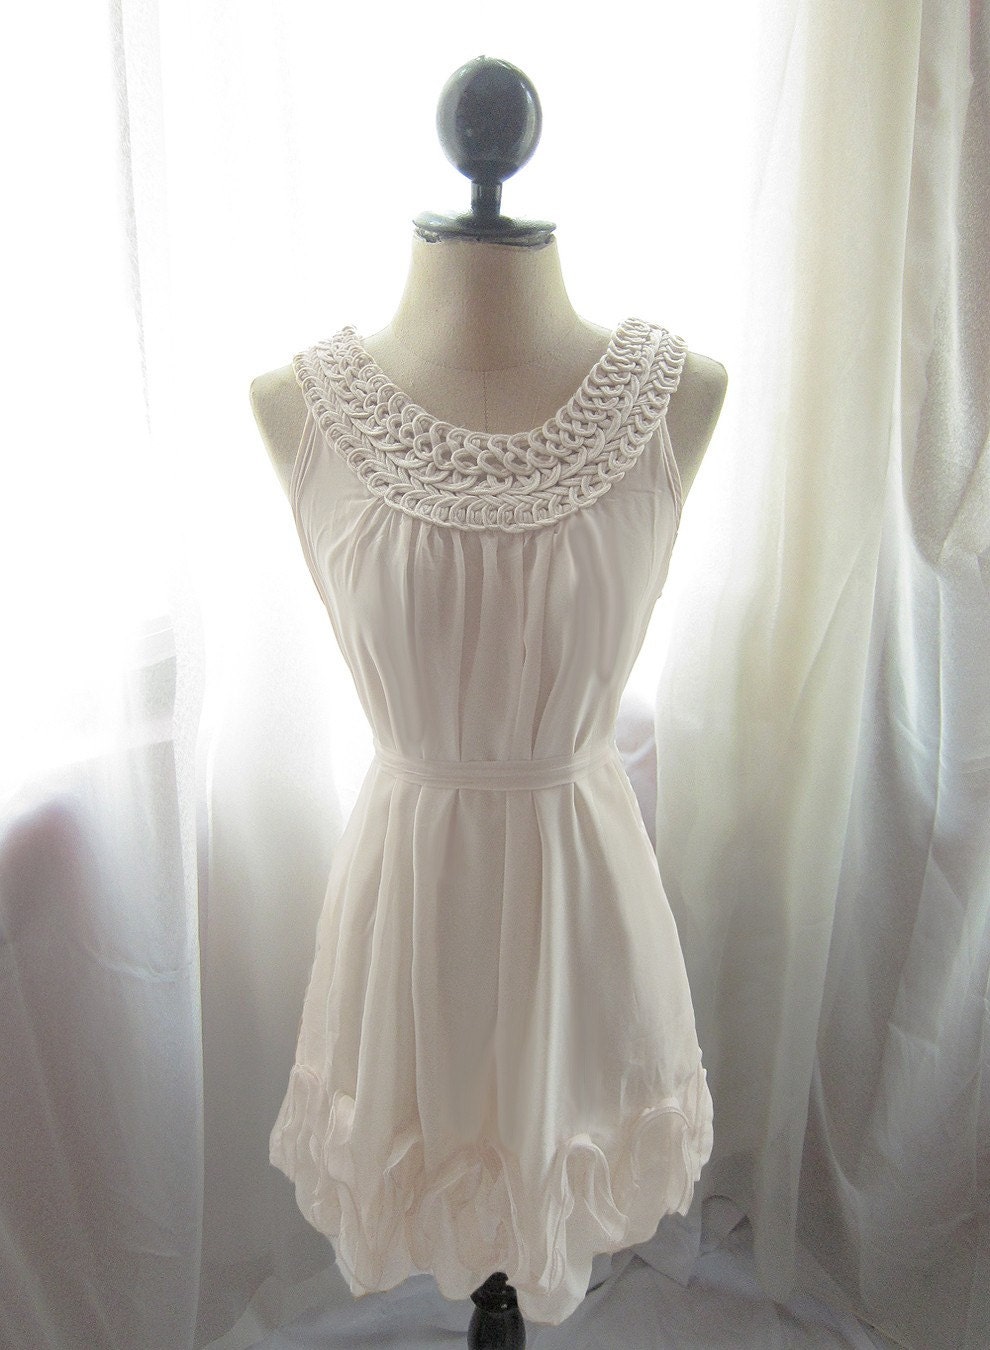 Grecian Romantic Rosette Woven Goddess Dreamy White Chiffon Dress.